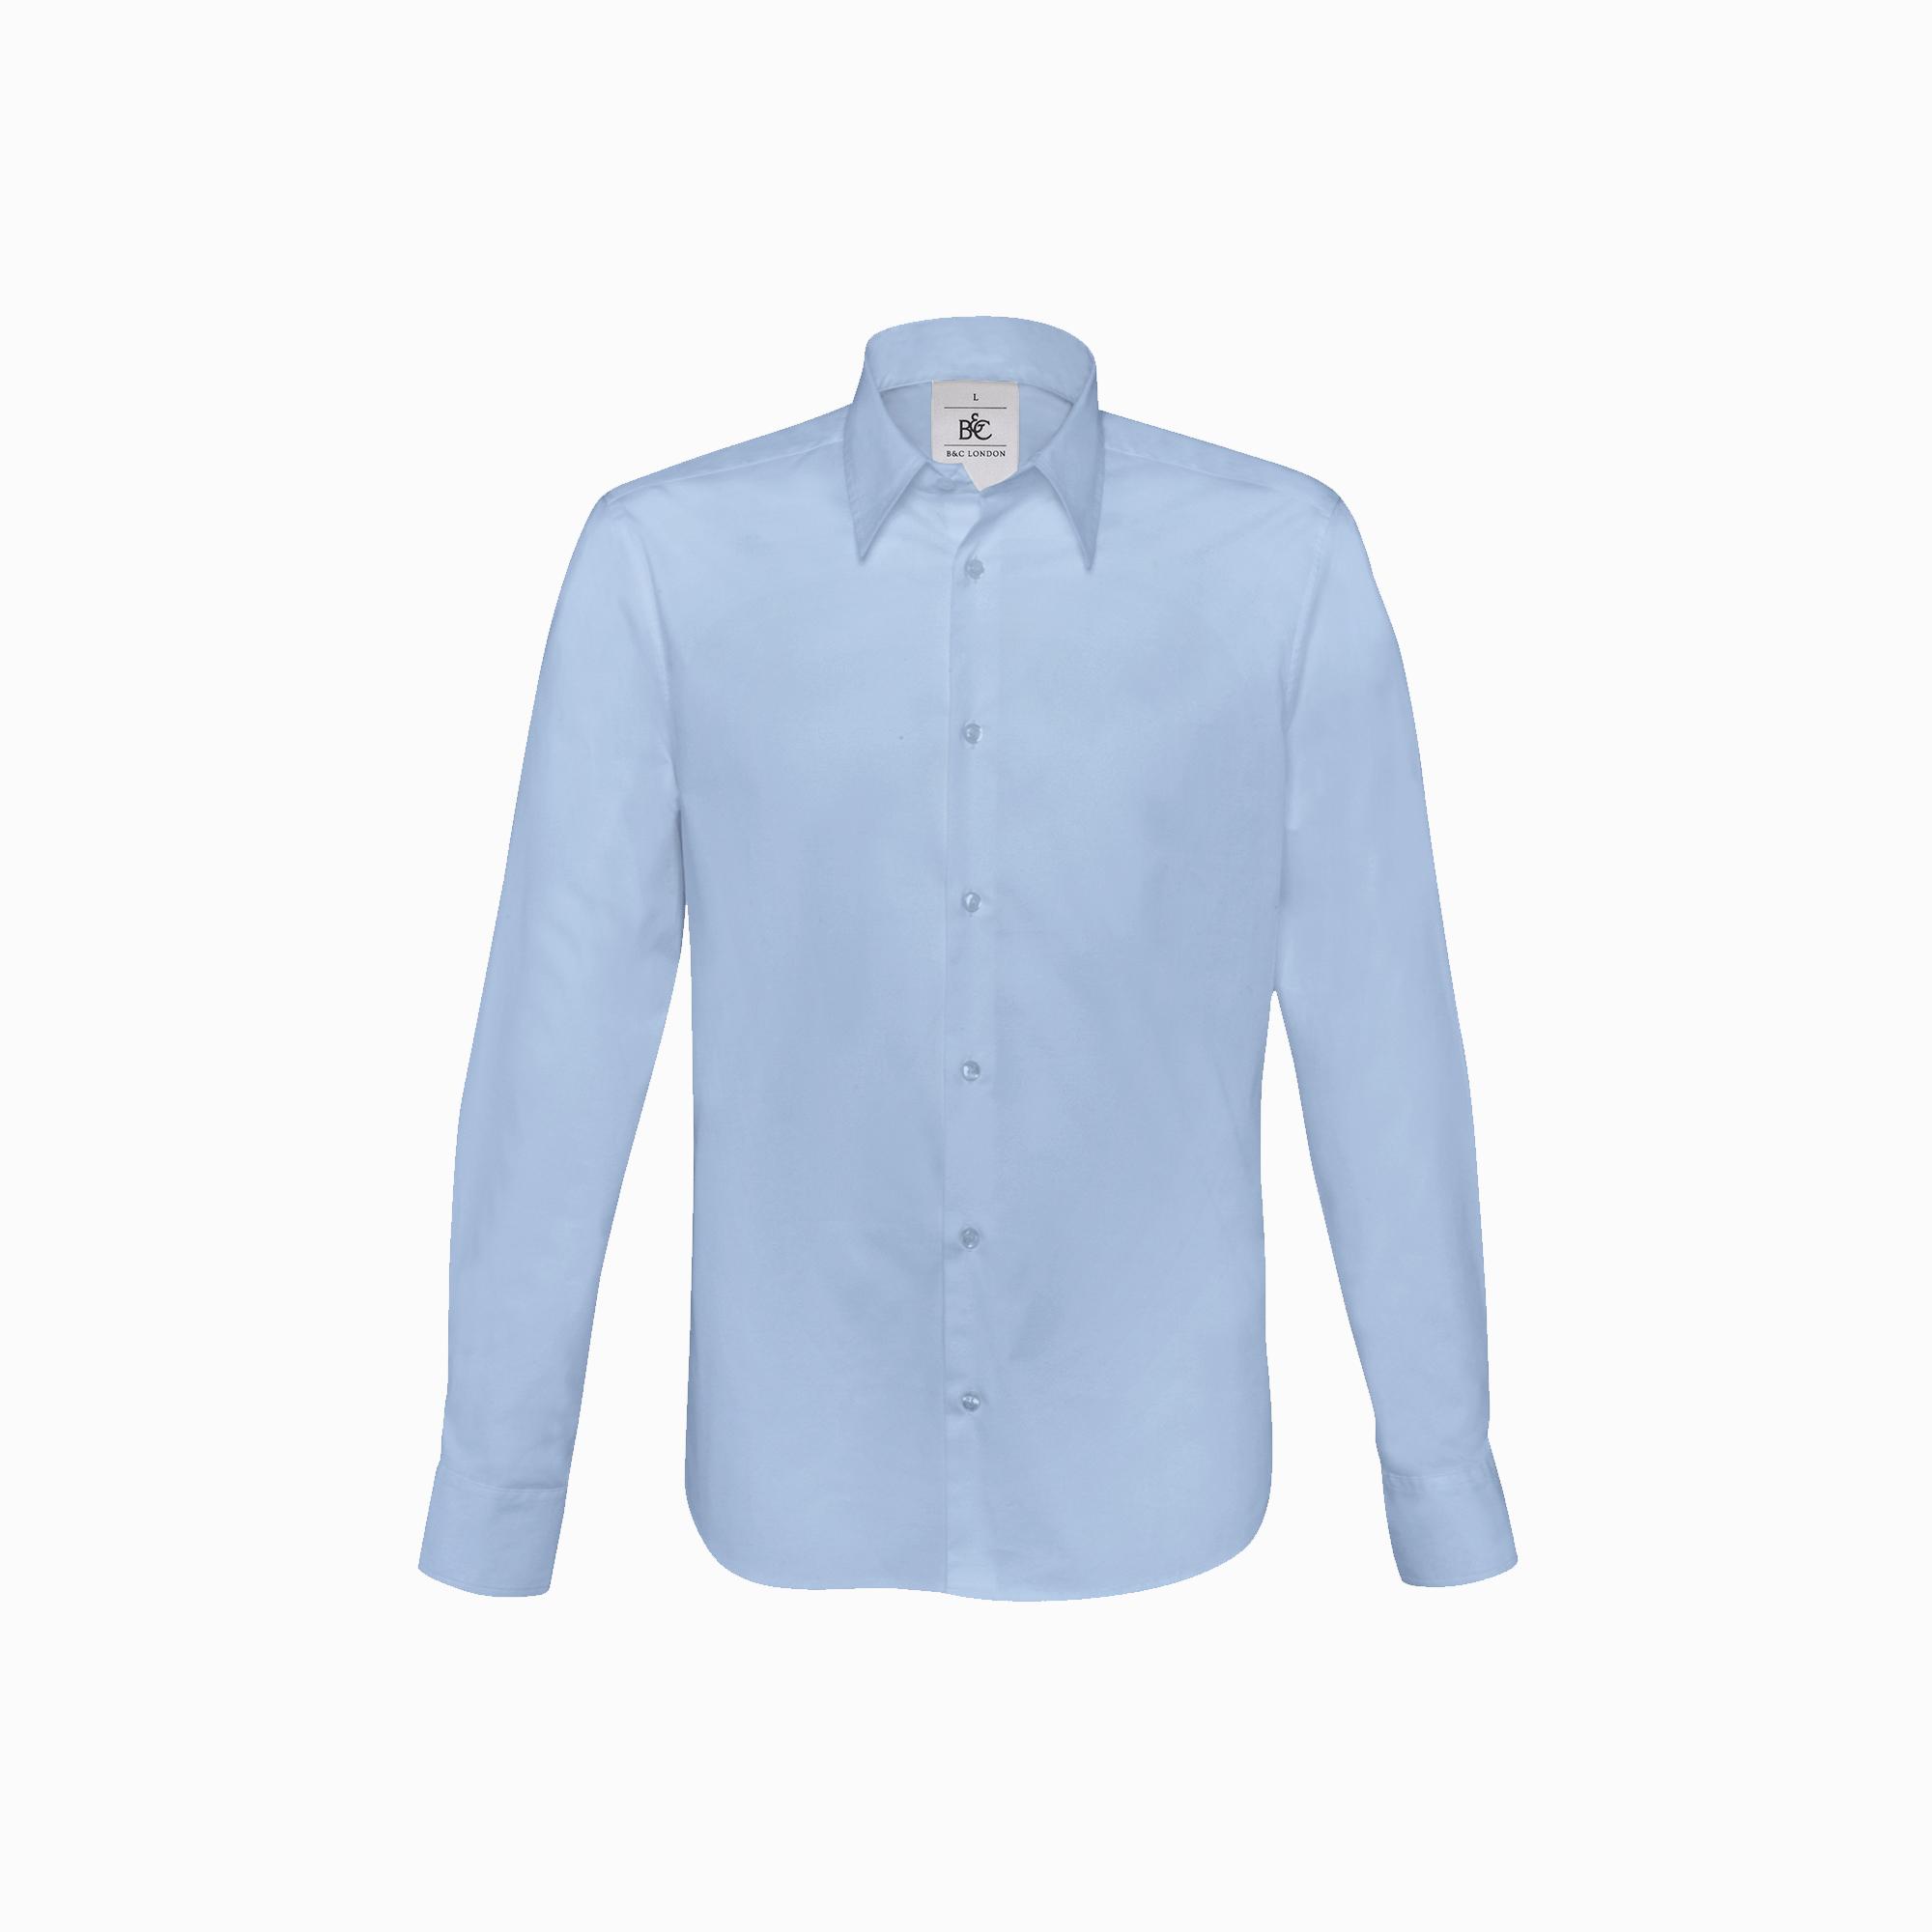 Рубашка с длинным рукавом London, размер XL , цвет корпоративный голубой, фото 1